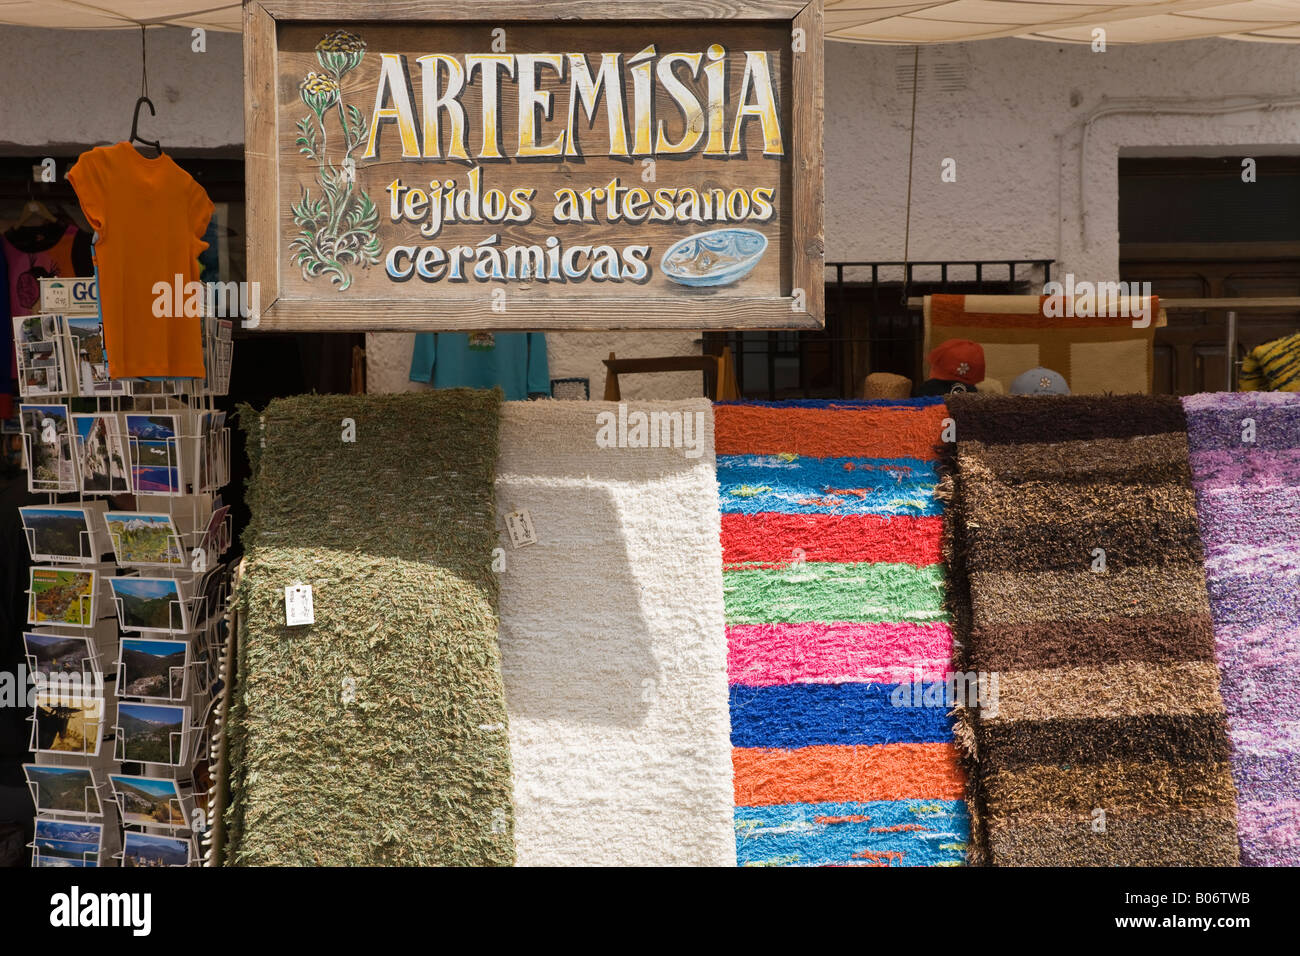 Jarapas Téxtil para el hogar de segunda mano barato en Barcelona Provincia